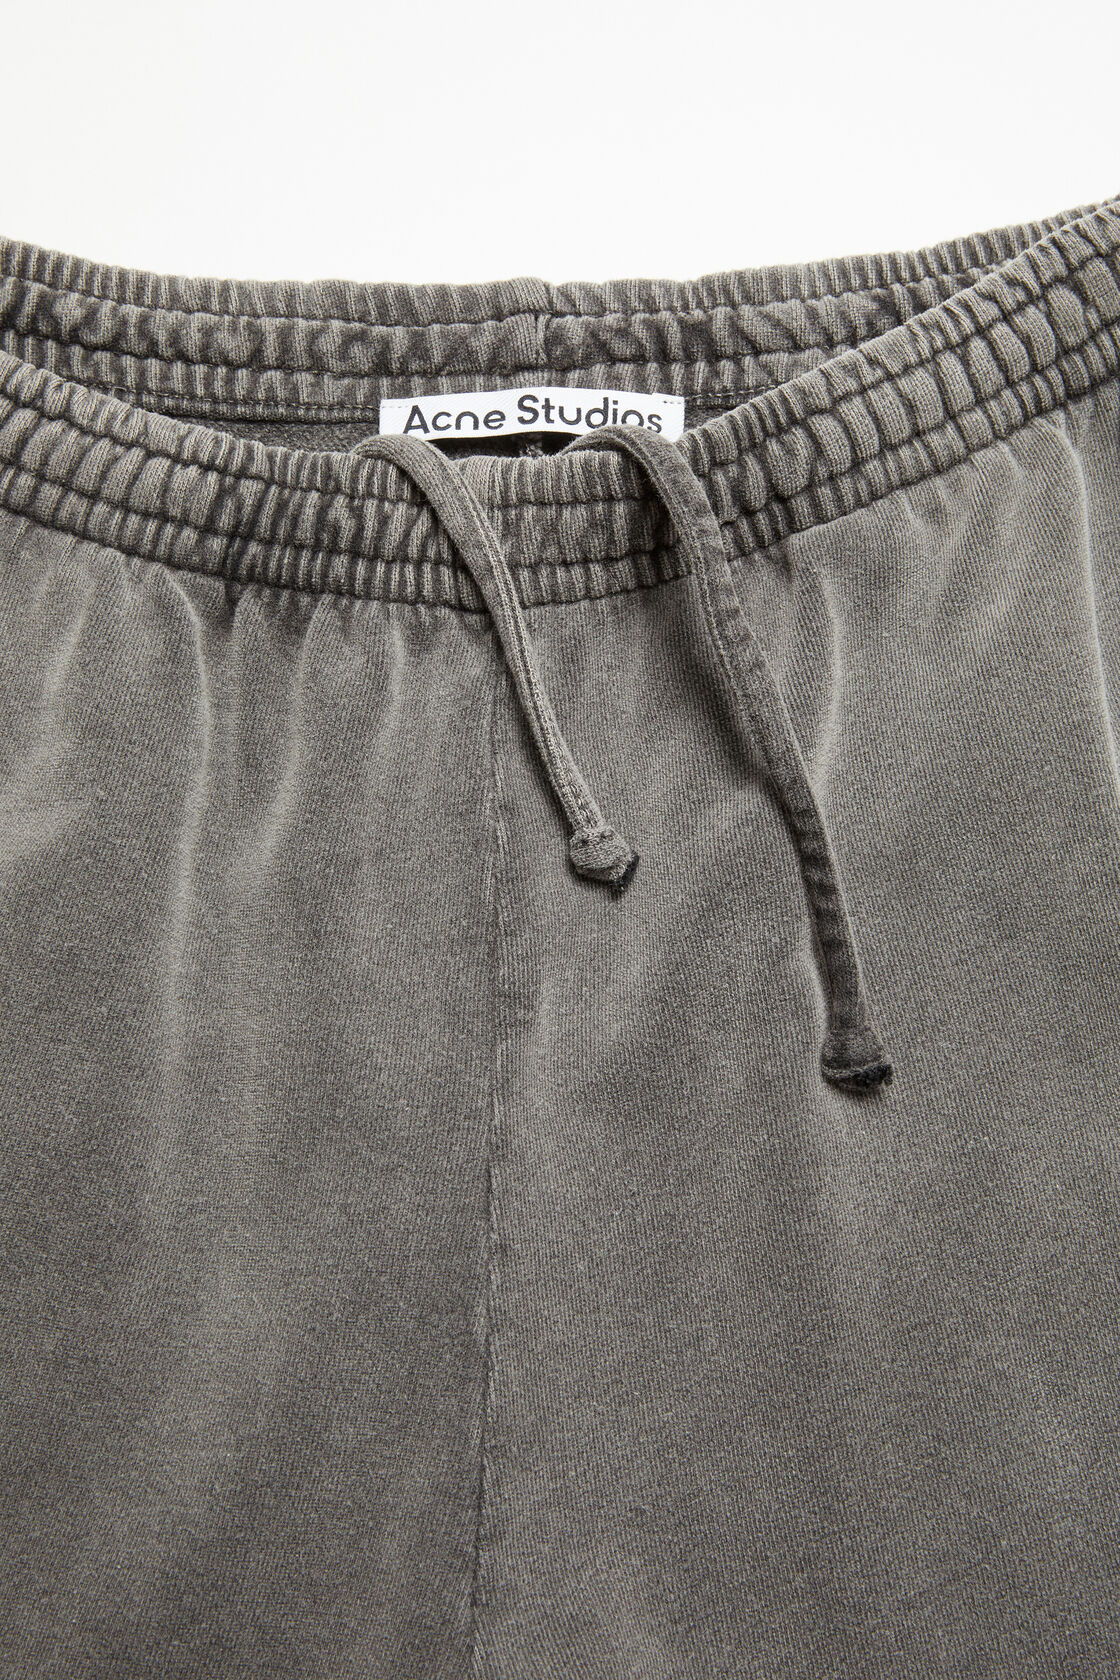 ACNE STUDIOS Vintage Sweatpant in Faded Black XS